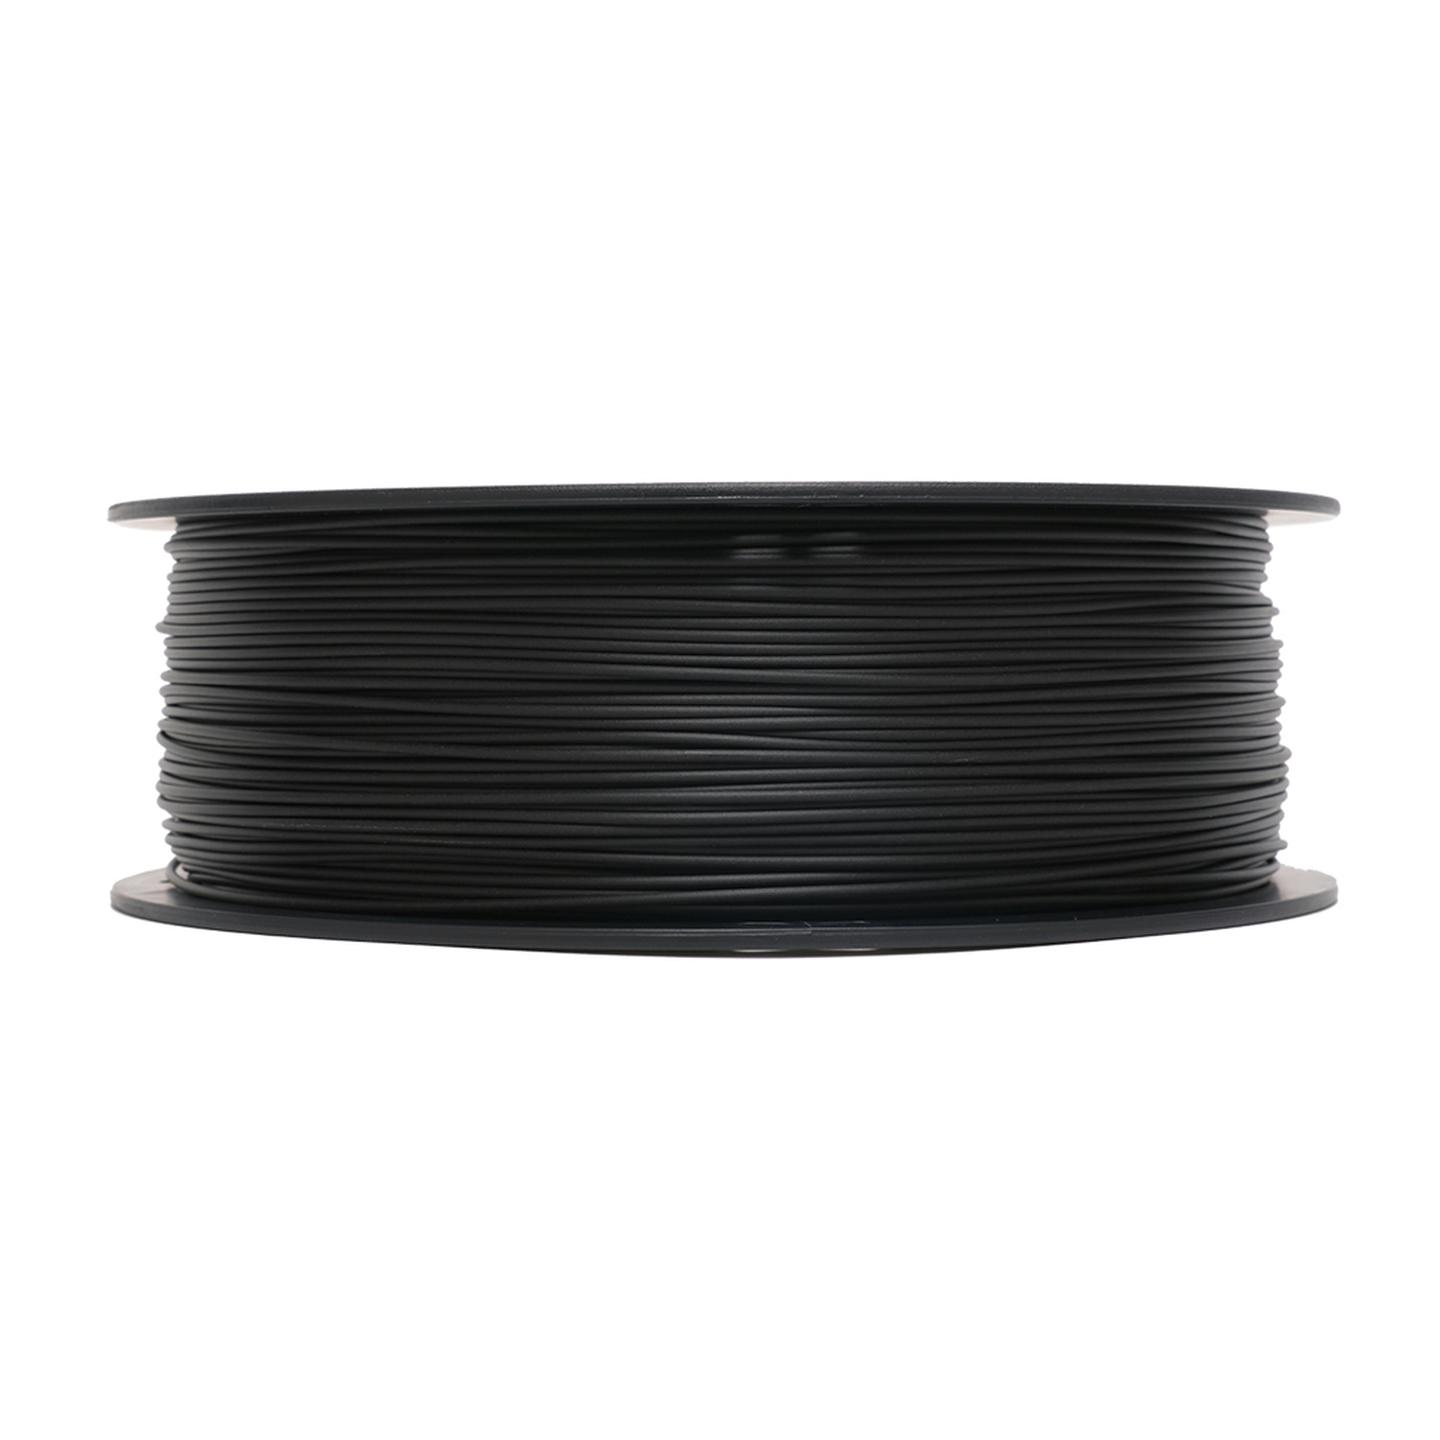 eSUN Black PLA-LW Filament 1kg 1.75mm